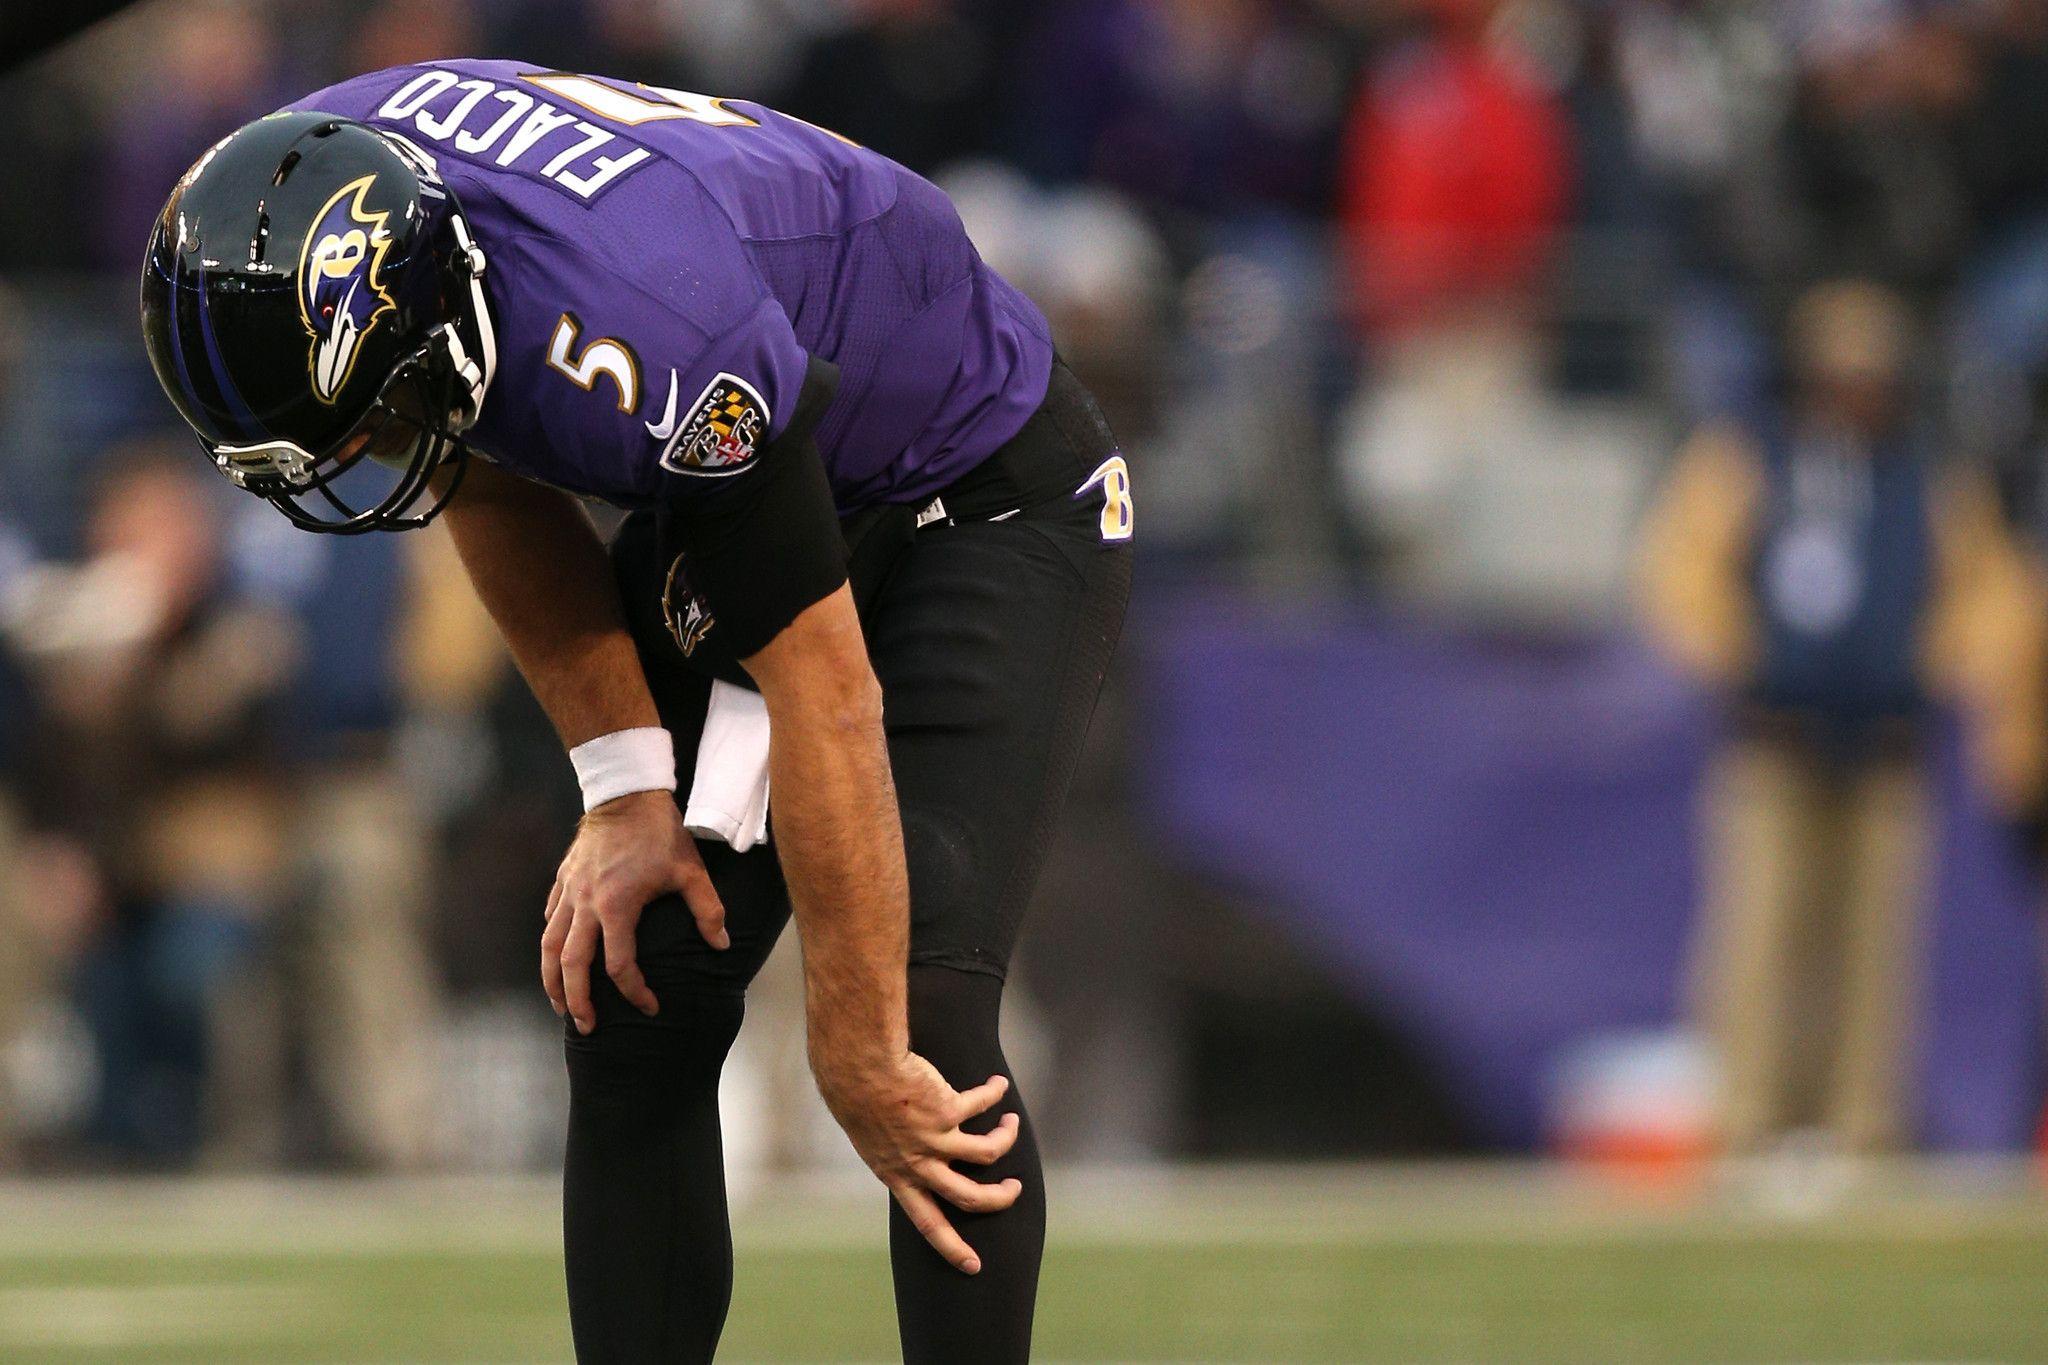 Ravens quarterback Joe Flacco ends his run of durability